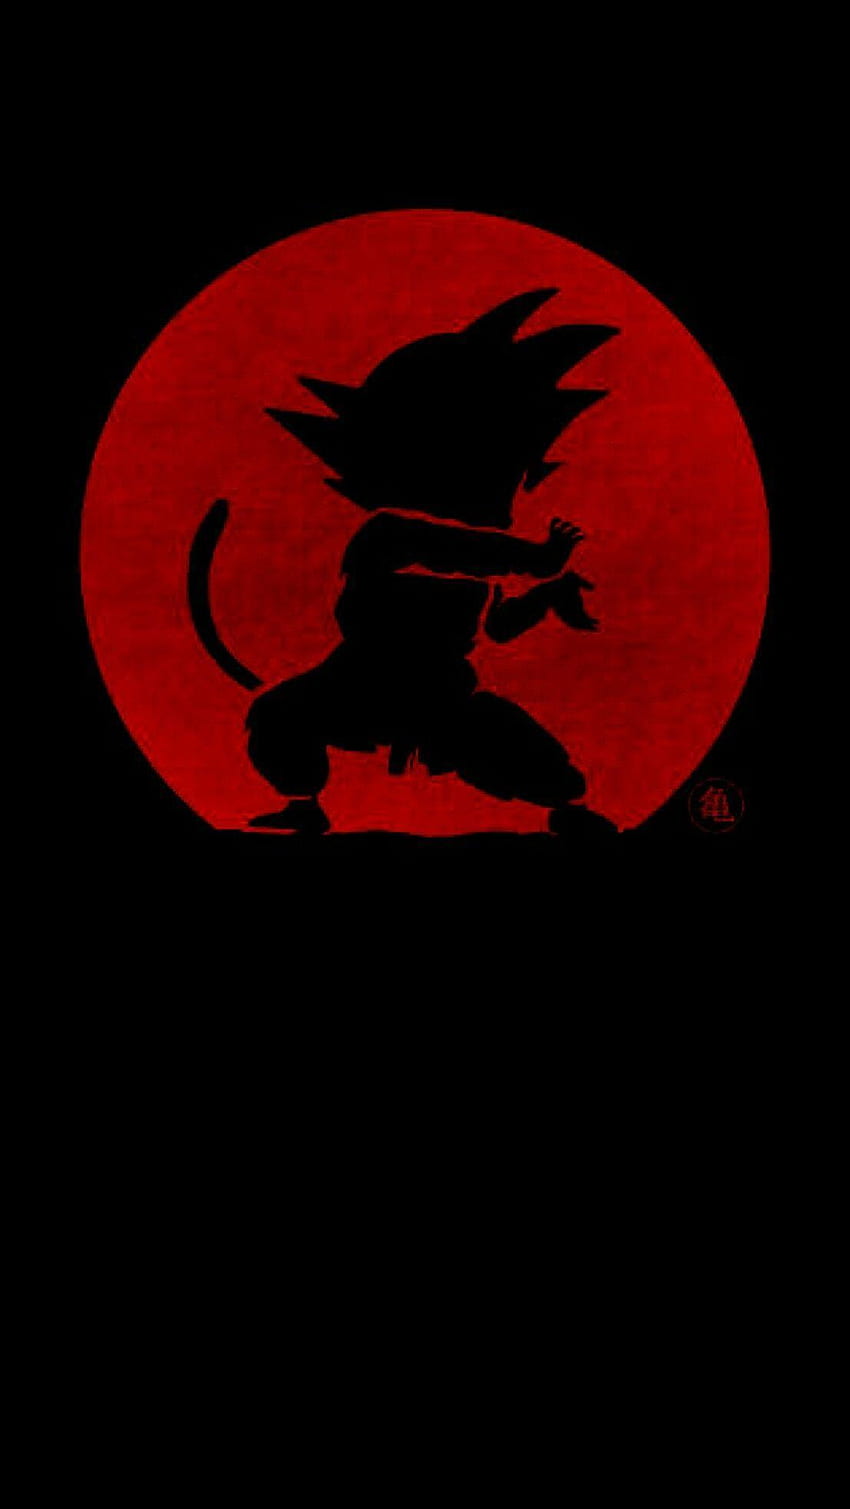 Goku Merah, Bola Naga Merah wallpaper ponsel HD